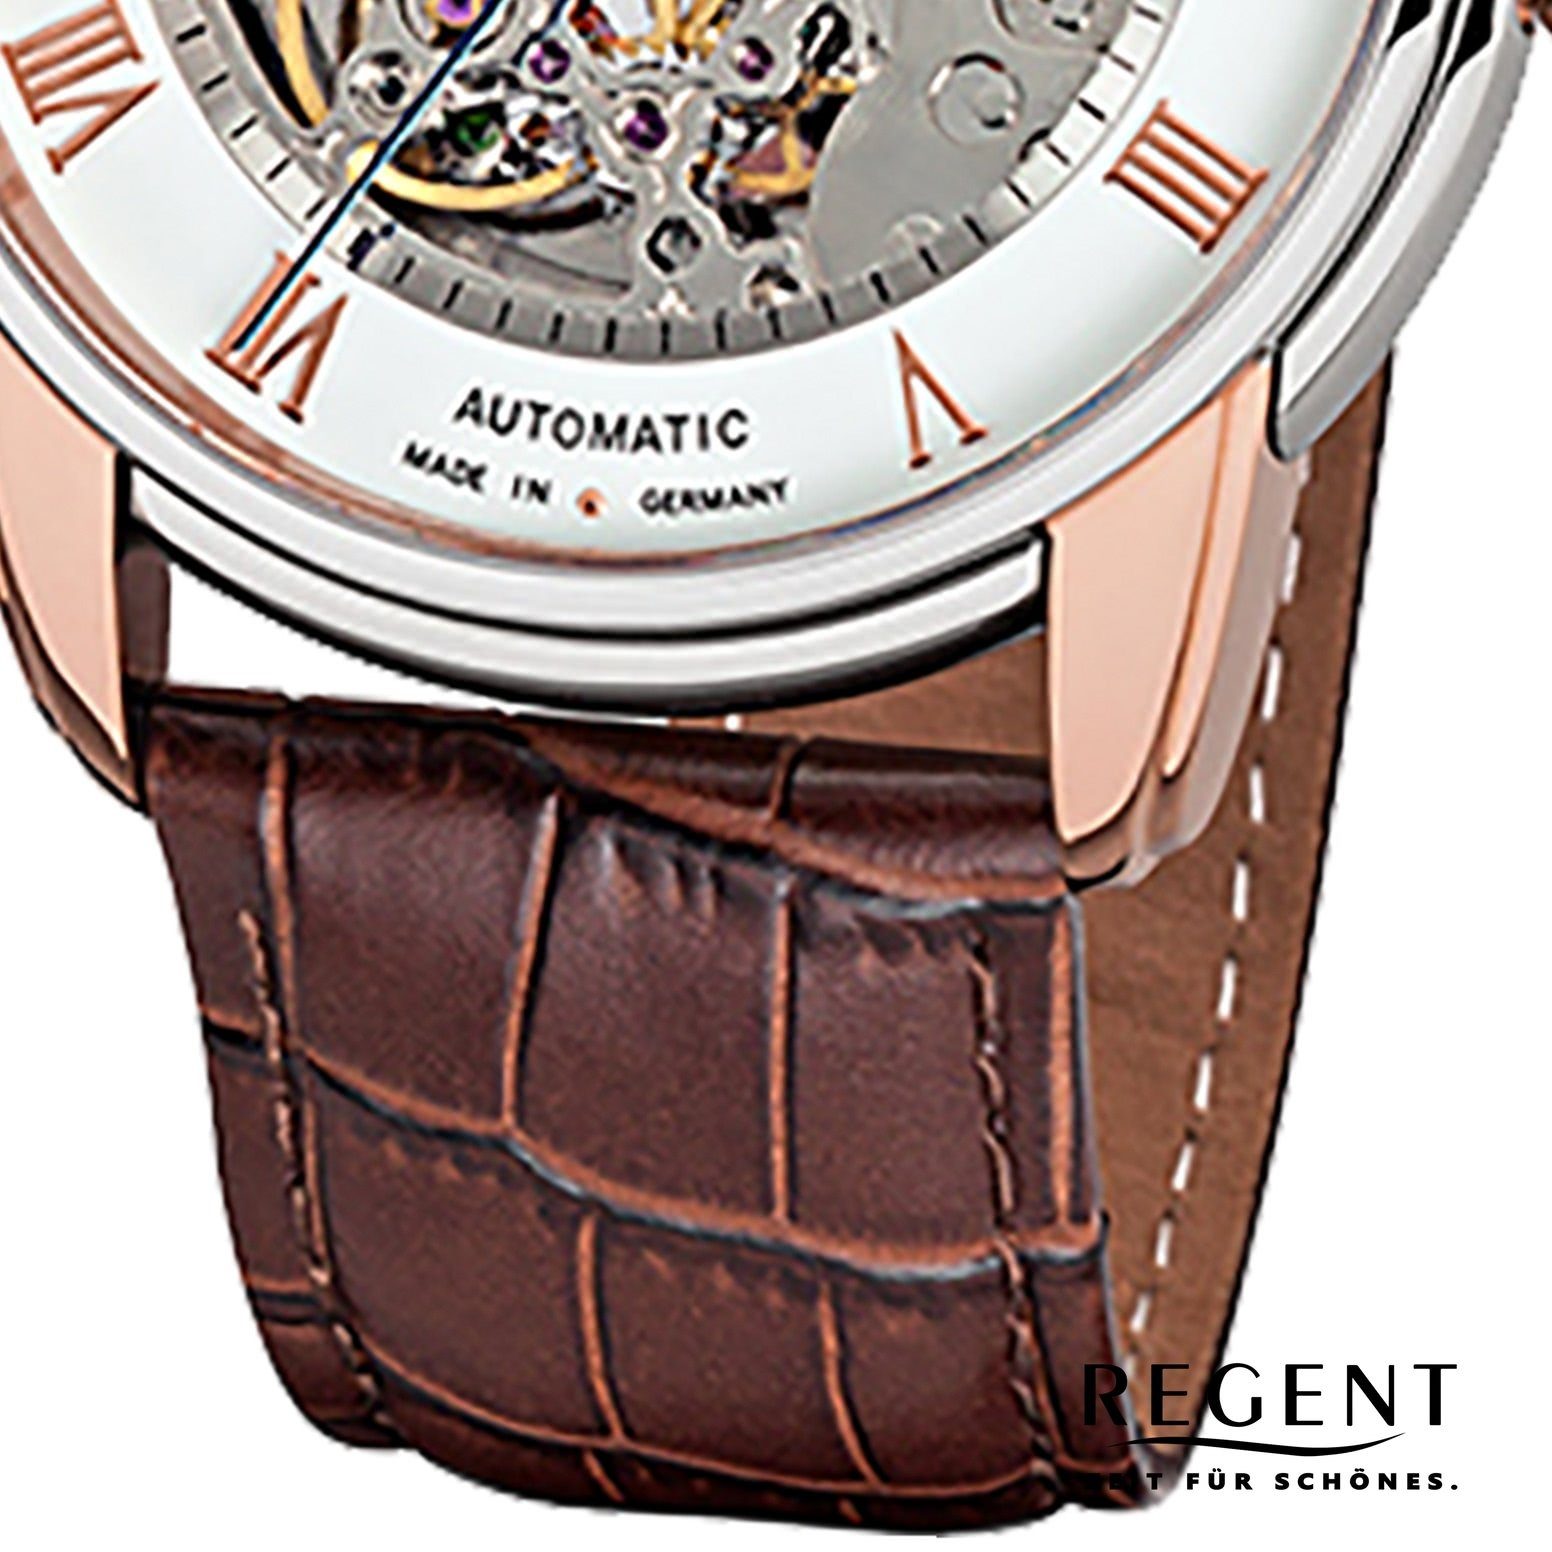 GM-1462 Regent Lederarmband rund, groß Leder, Armbanduhr (ca. Herren Automatik Regent Herren Quarzuhr Uhr 42mm),